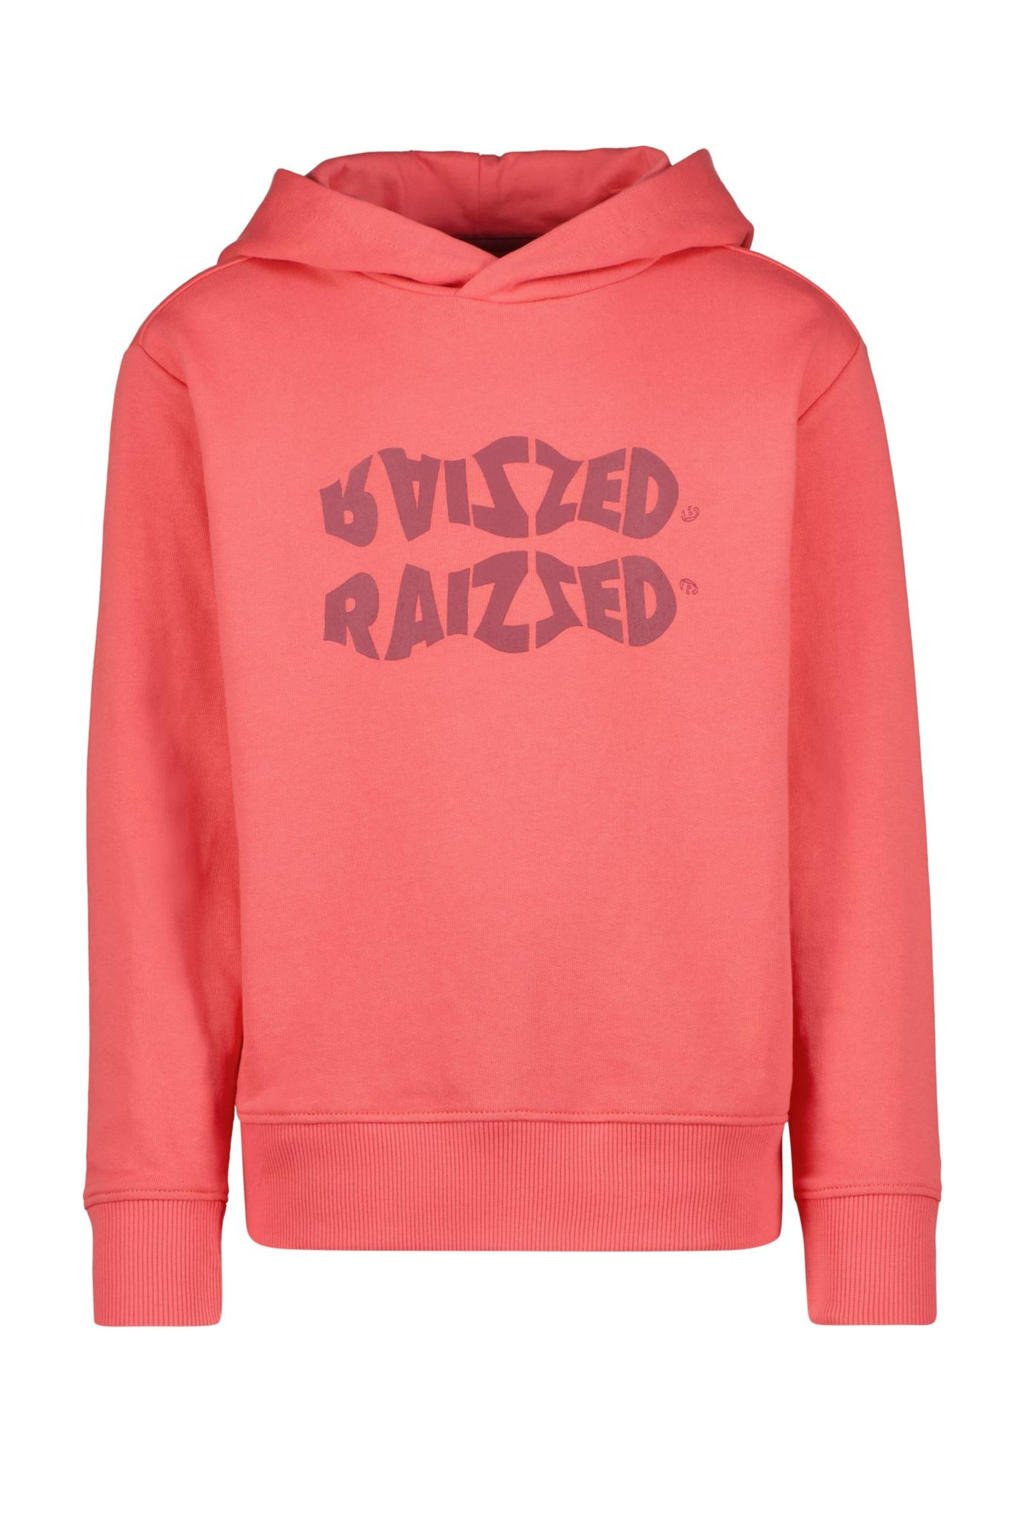 Raizzed hoodie met logo roze/zwart